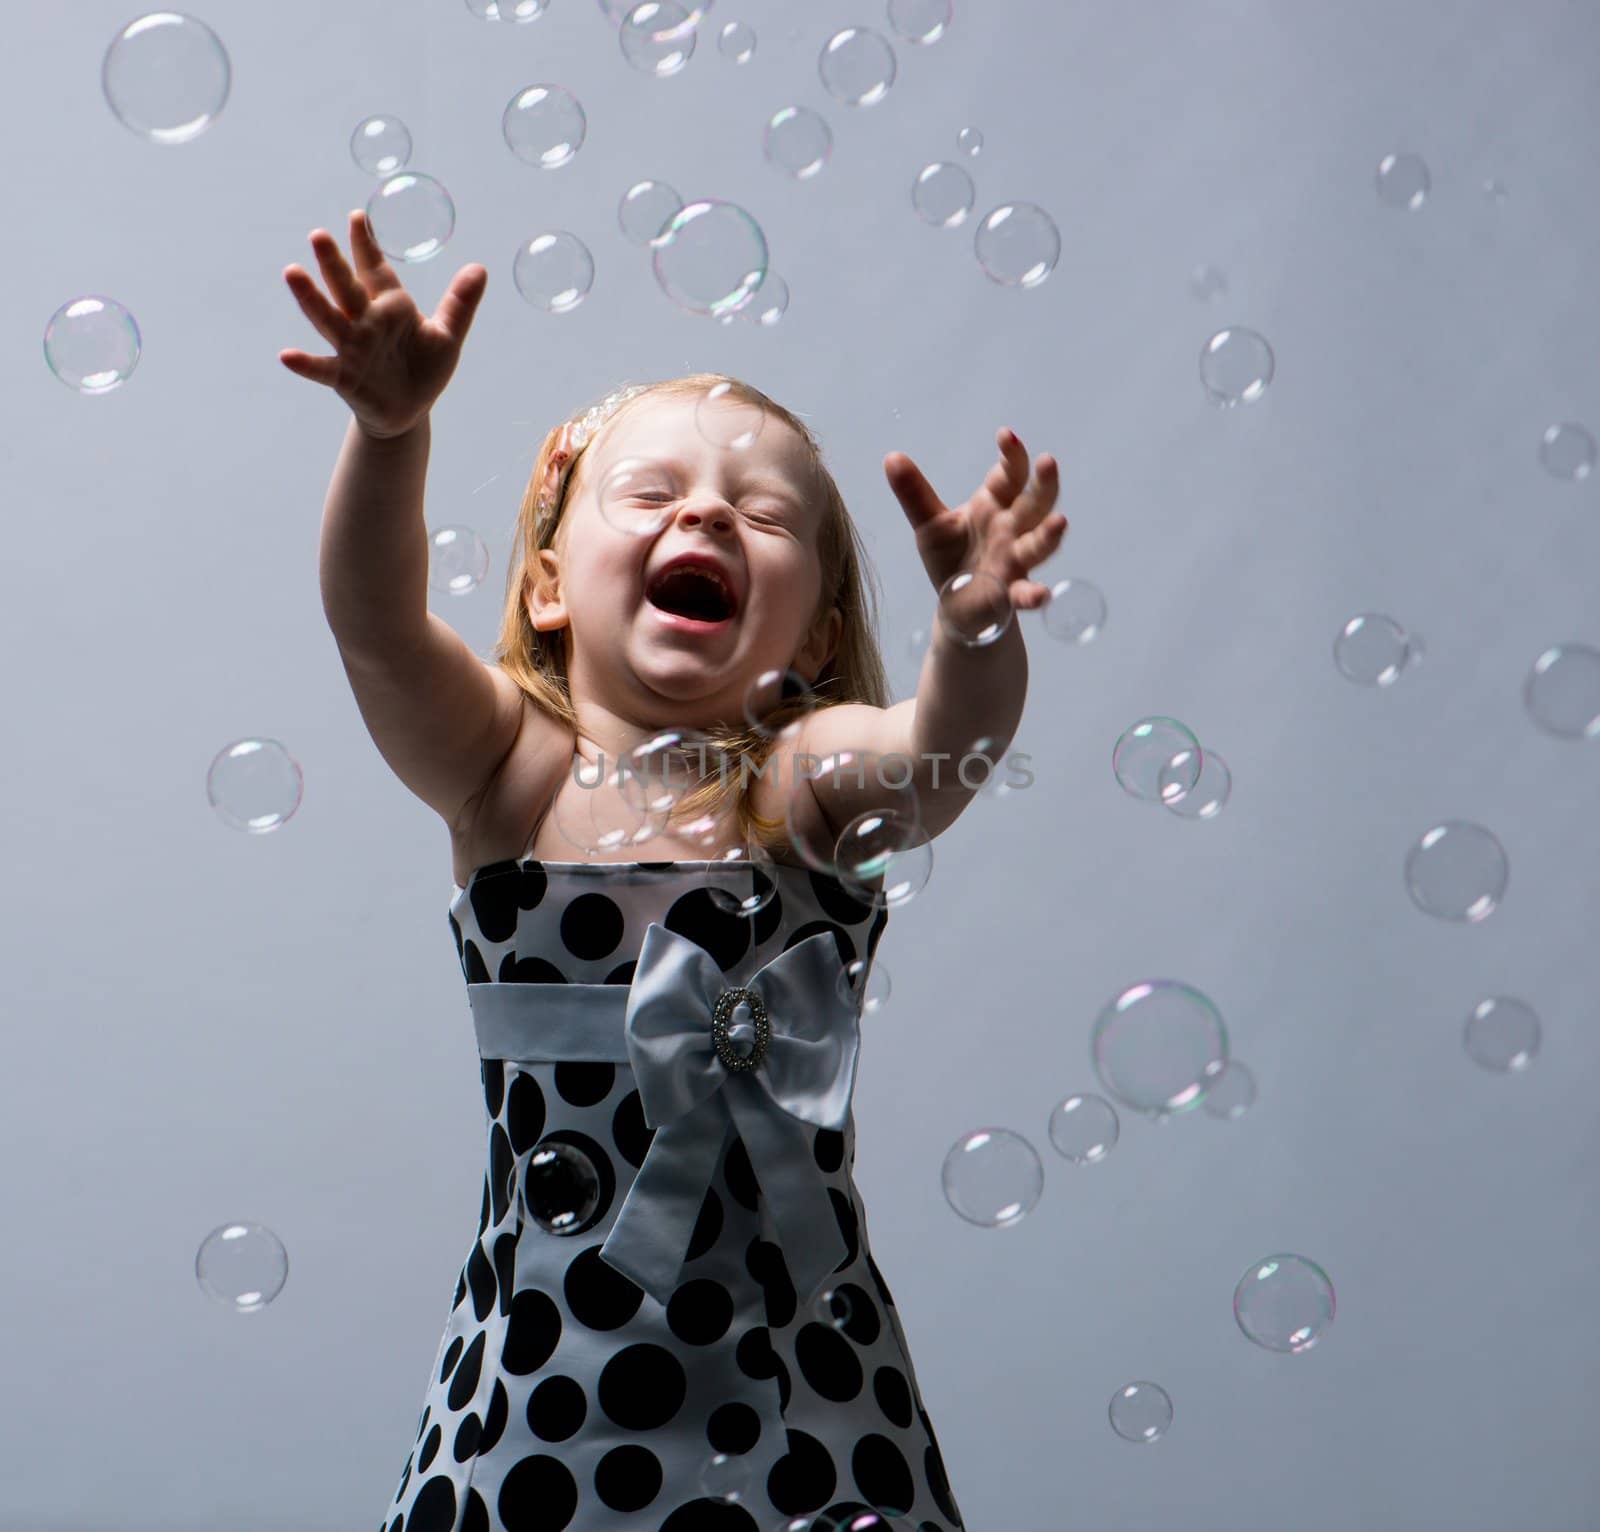 little girl with soap bubbles by GekaSkr